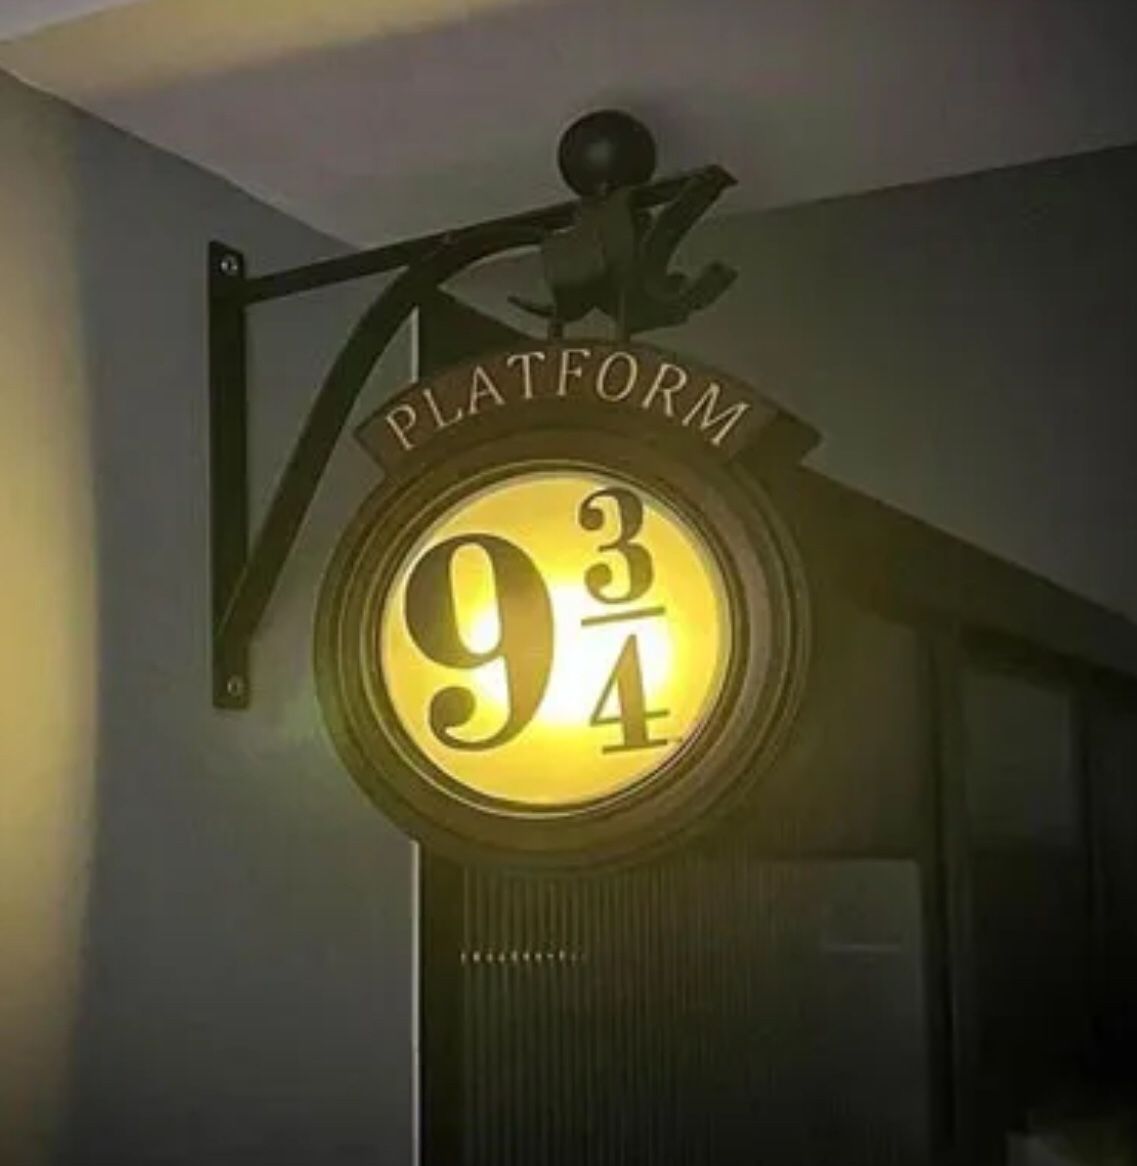 3D Harry Potter Hanging 9 3/4 Night Light Hanging Wall Lamp Platform Hogwartsed // 11 Available 